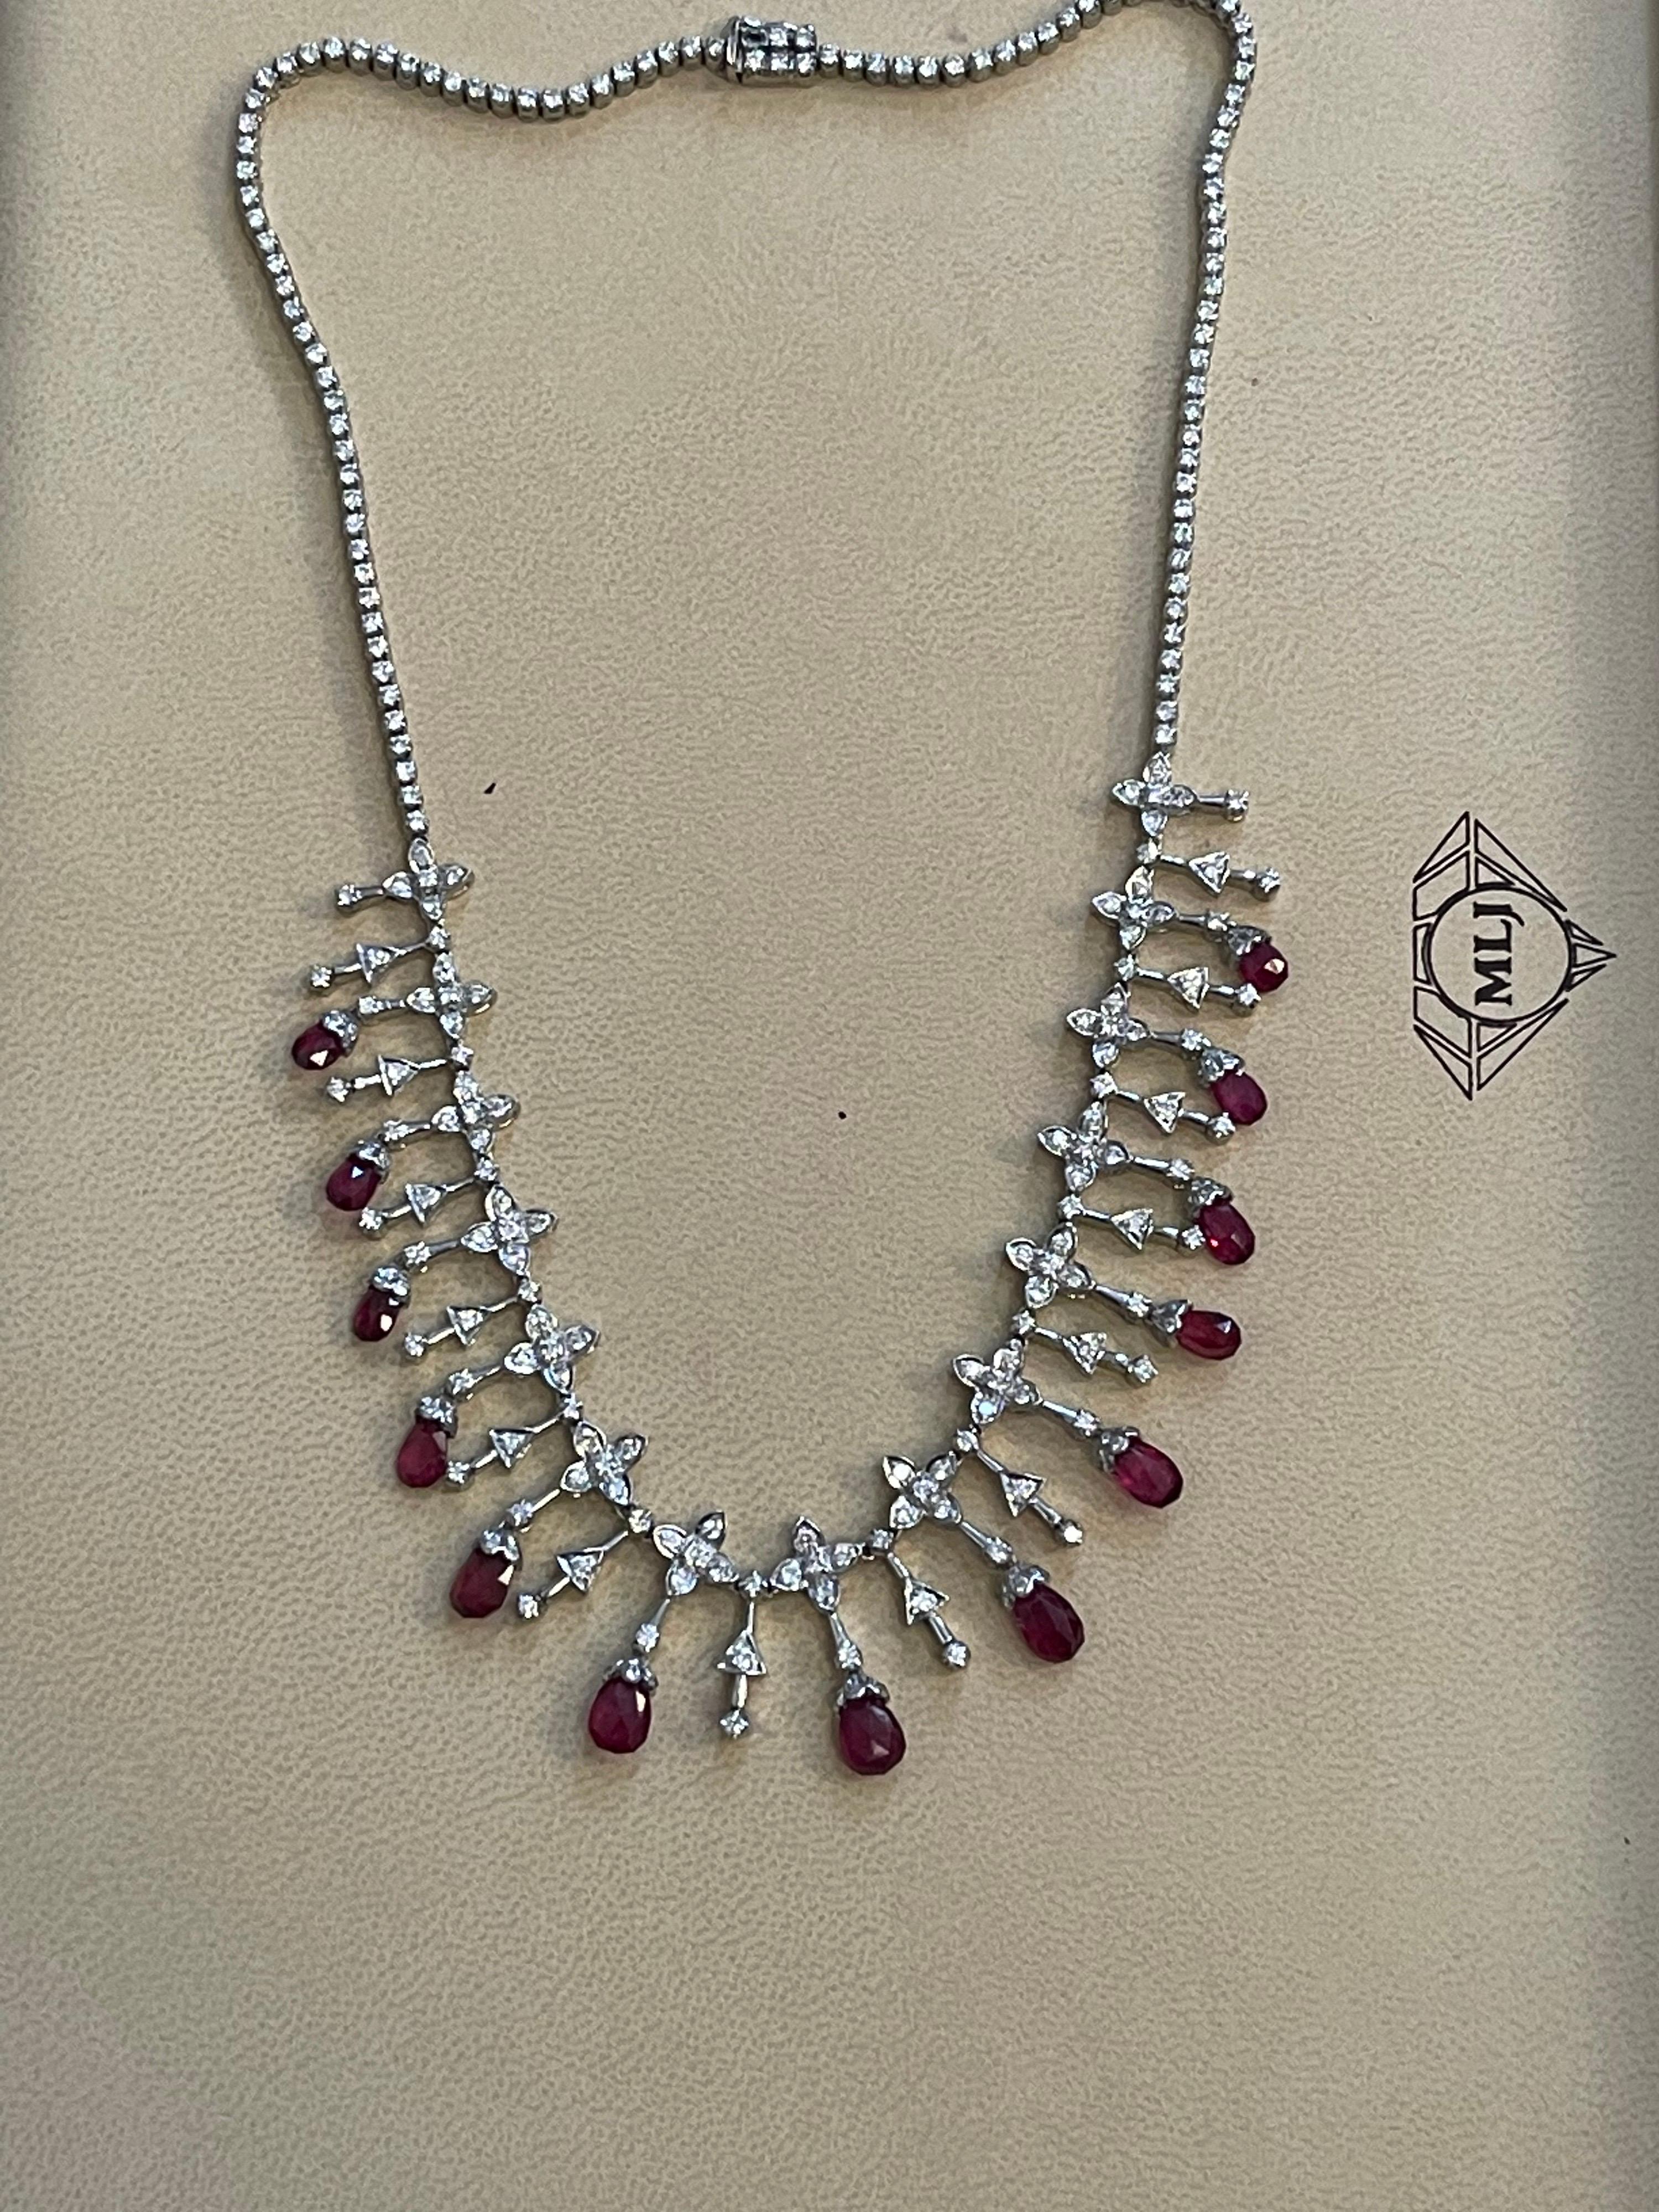 18 Ct Natural Ruby Briolette & 8 Ct Diamond Necklace 18 Karat White Gold, Estate For Sale 2